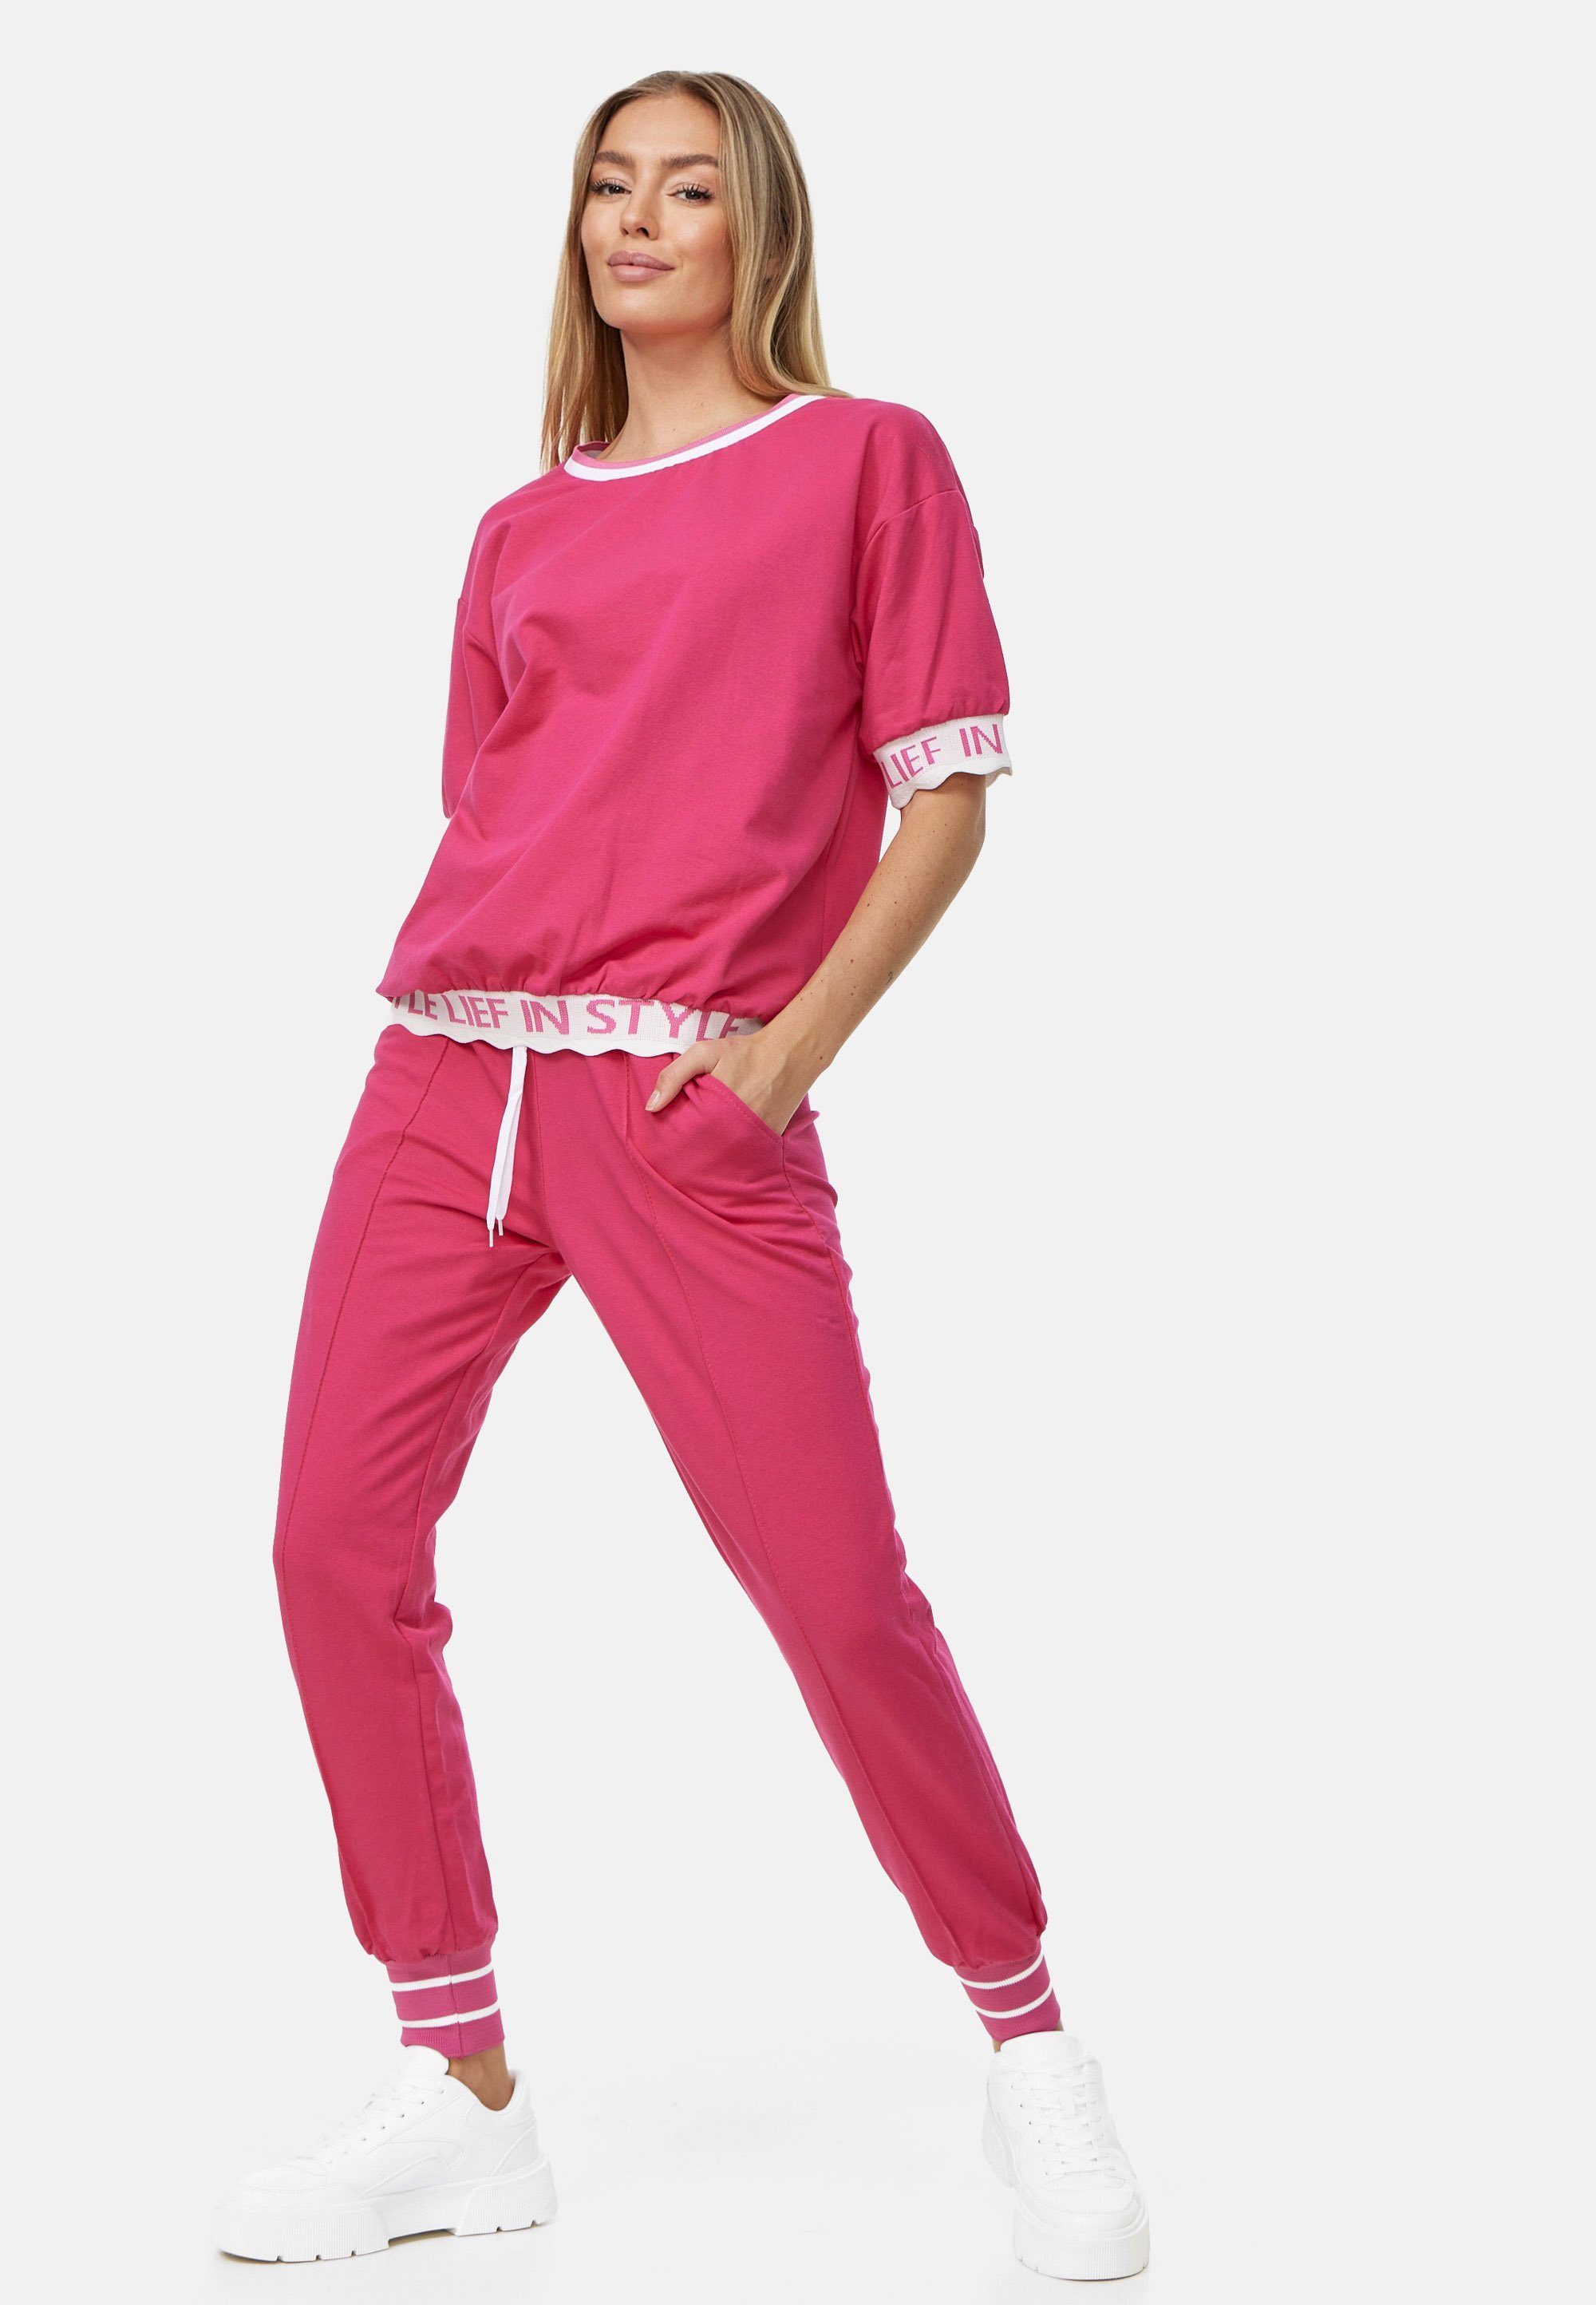 stylishem rosa mit Decay Schriftzug T-Shirt